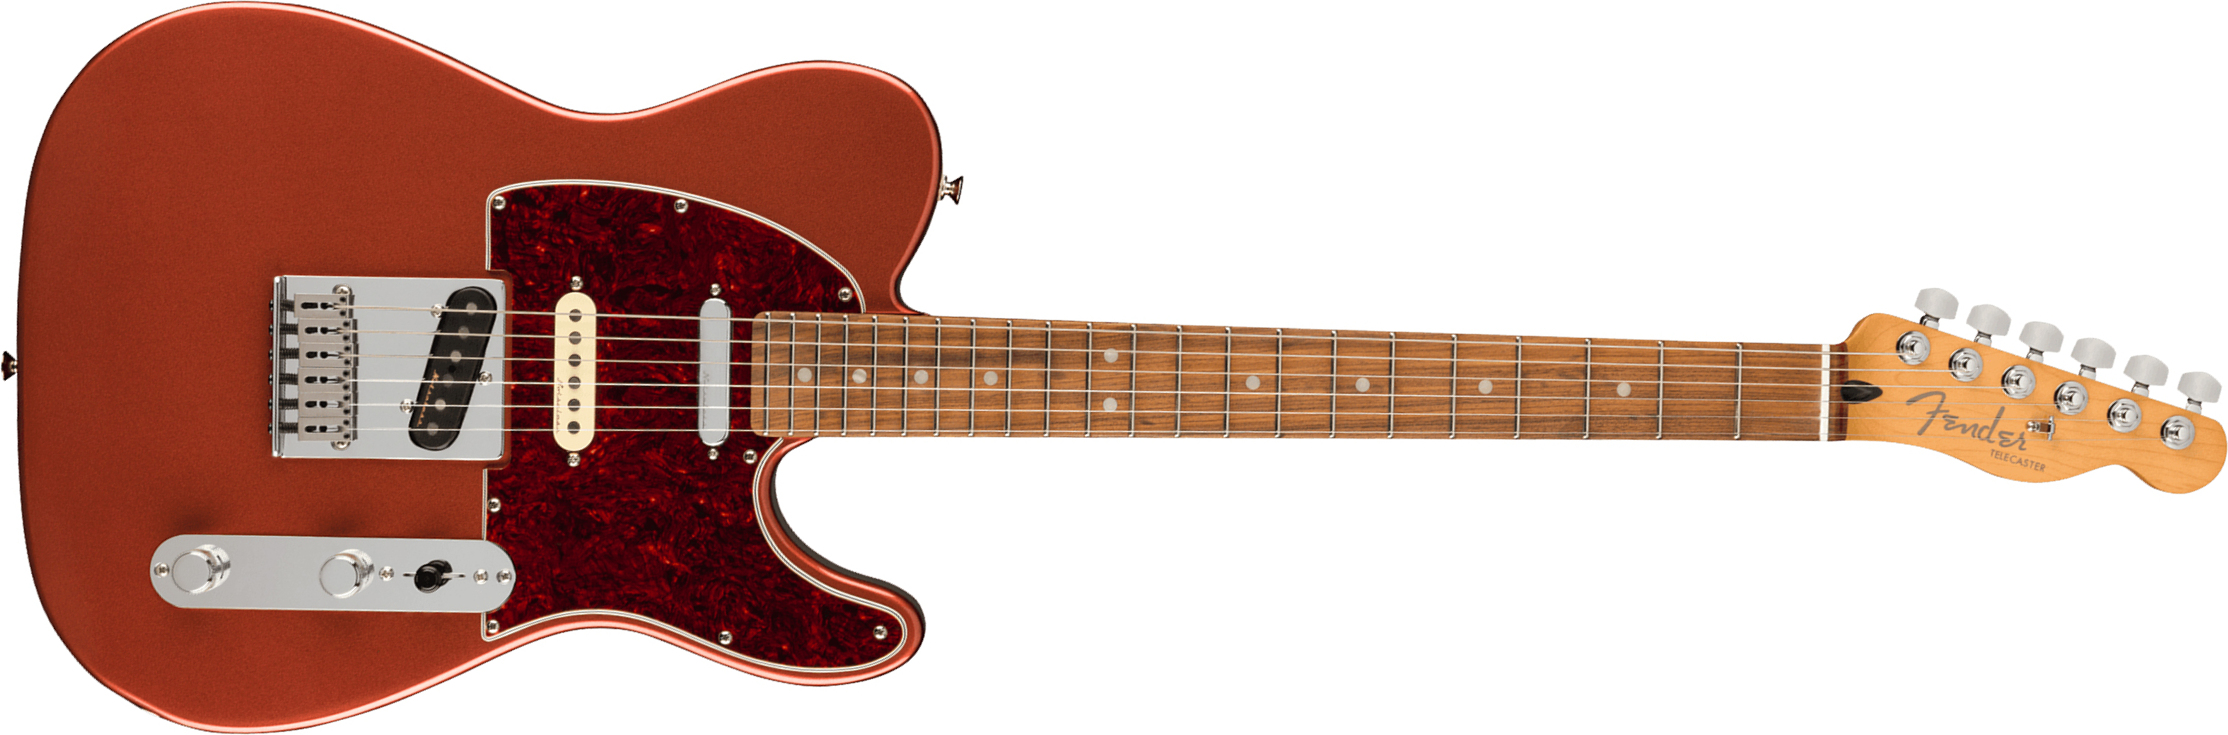 Fender Tele Player Plus Nashville Mex 3s Ht Pf - Aged Candy Apple Red - Televorm elektrische gitaar - Main picture